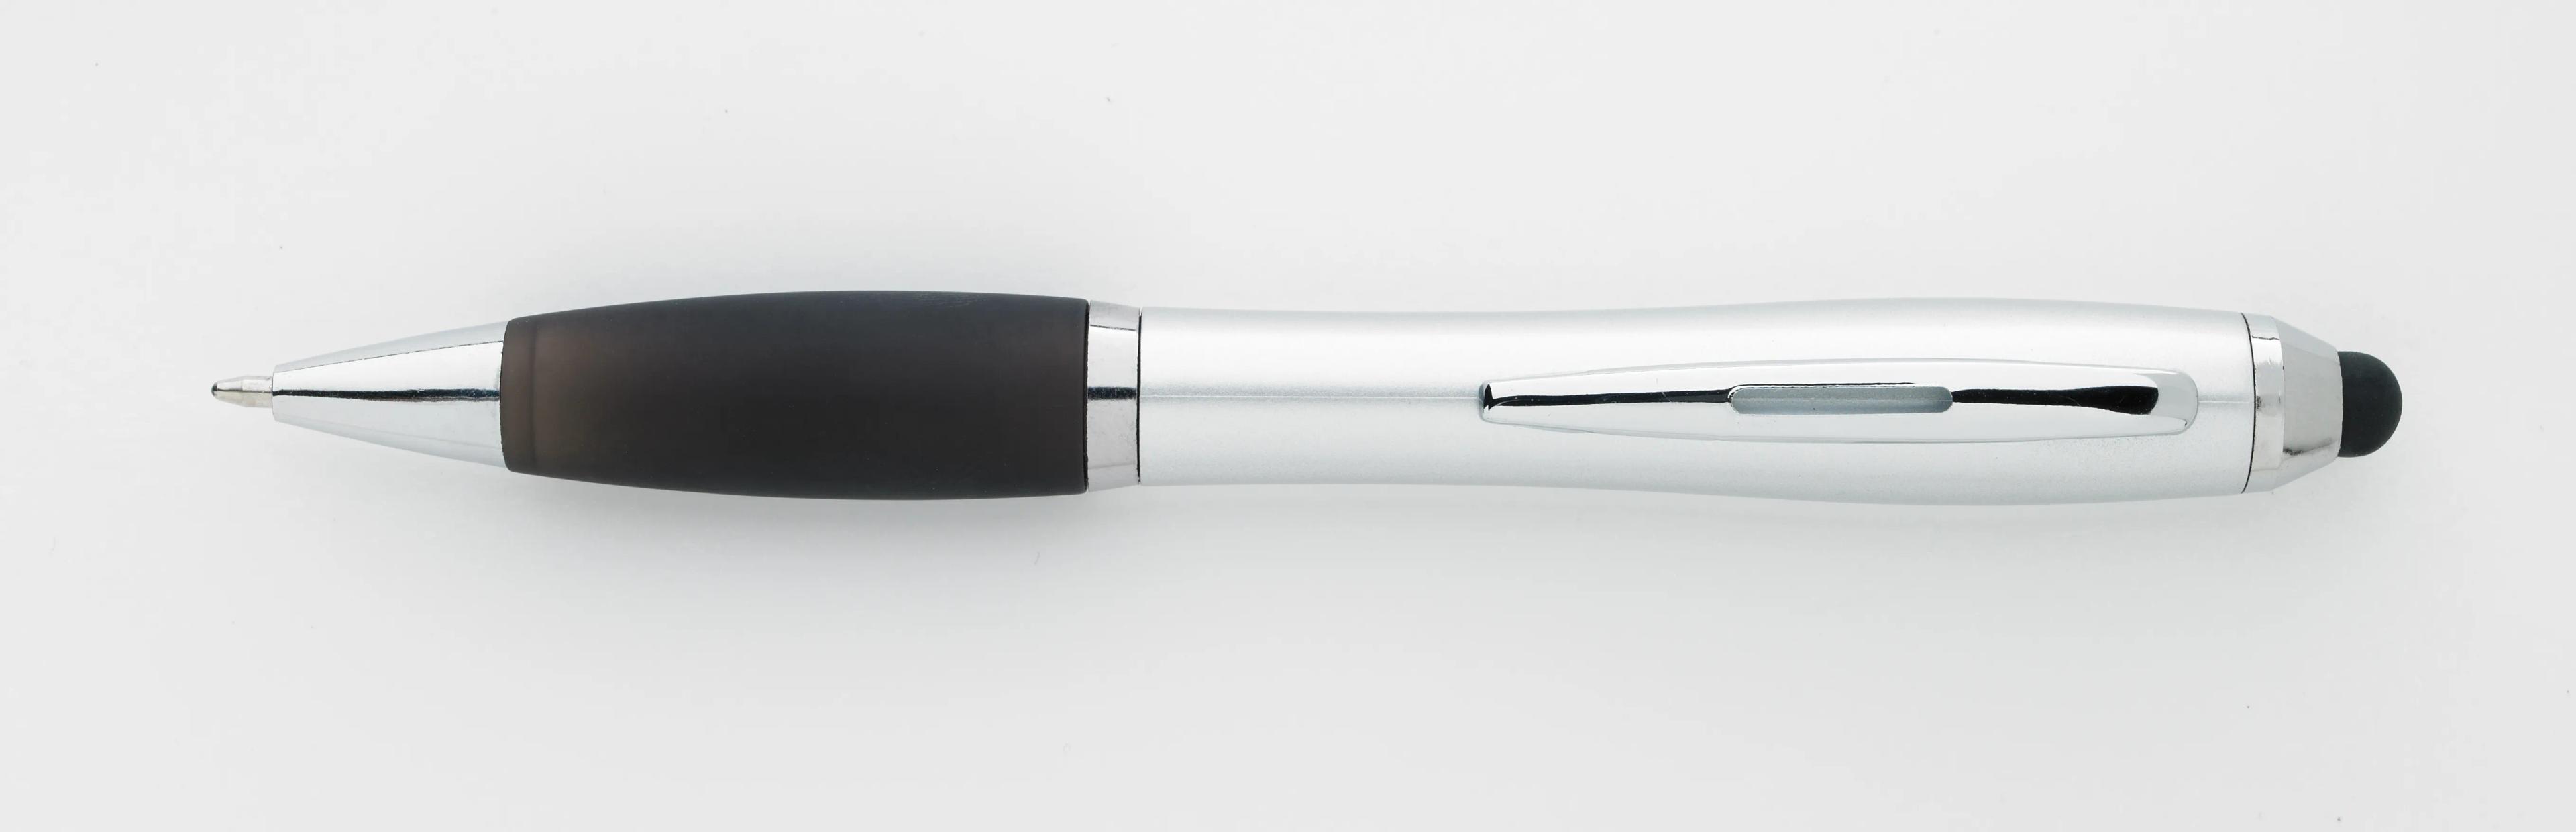 Ion Silver Stylus Pen 5 of 17